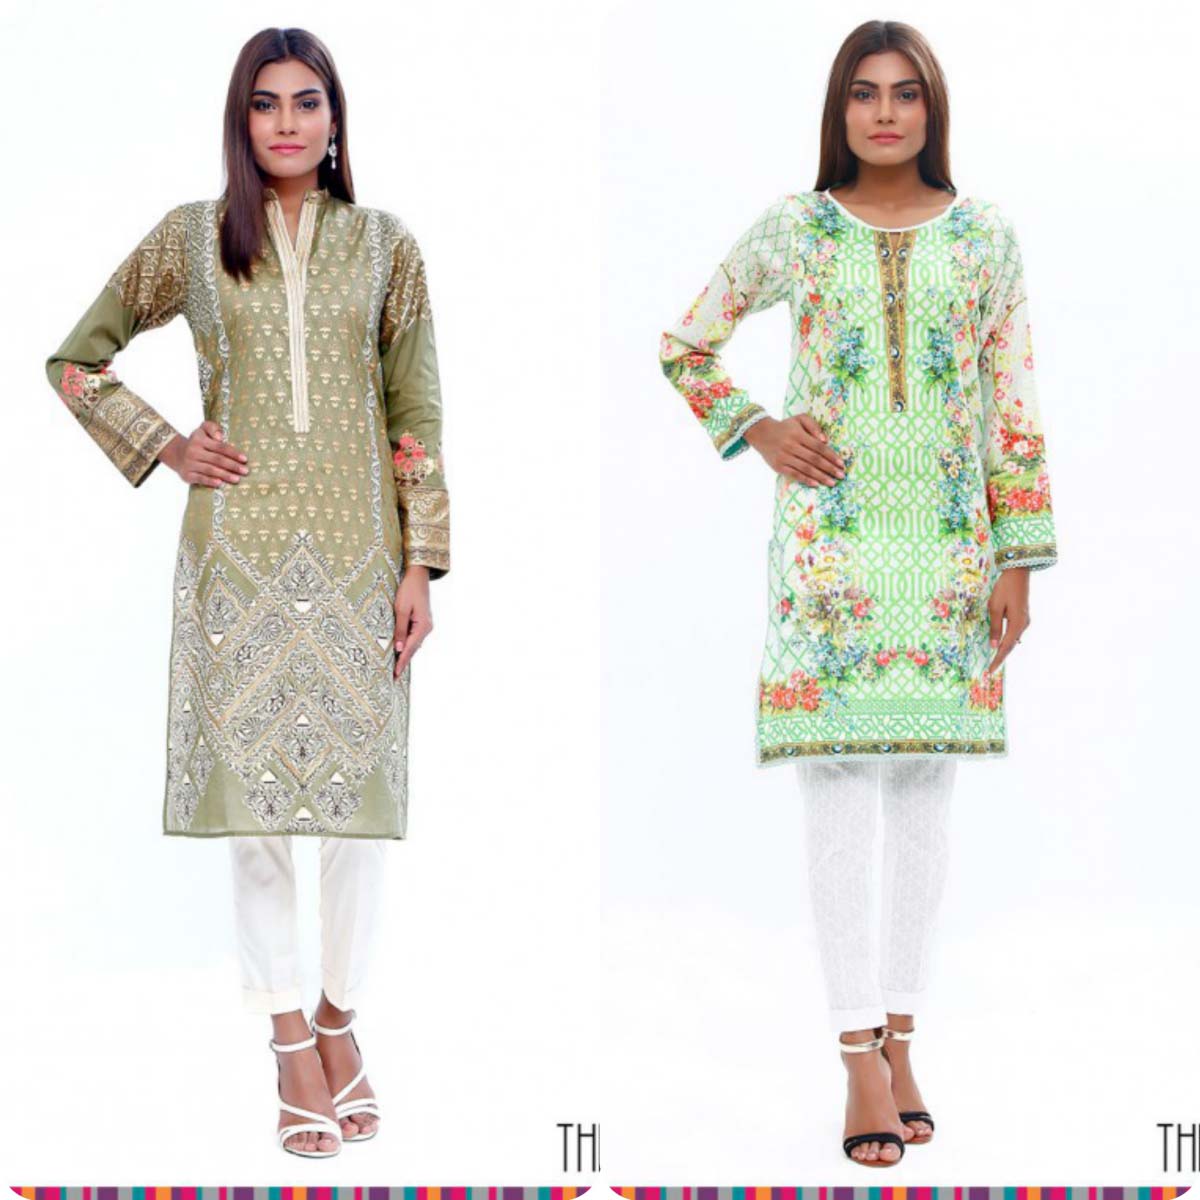 Stylish Embroidered Eid KurtisTunics for Girls By THREDZ 2016-2016 Complete Look-Book (9)